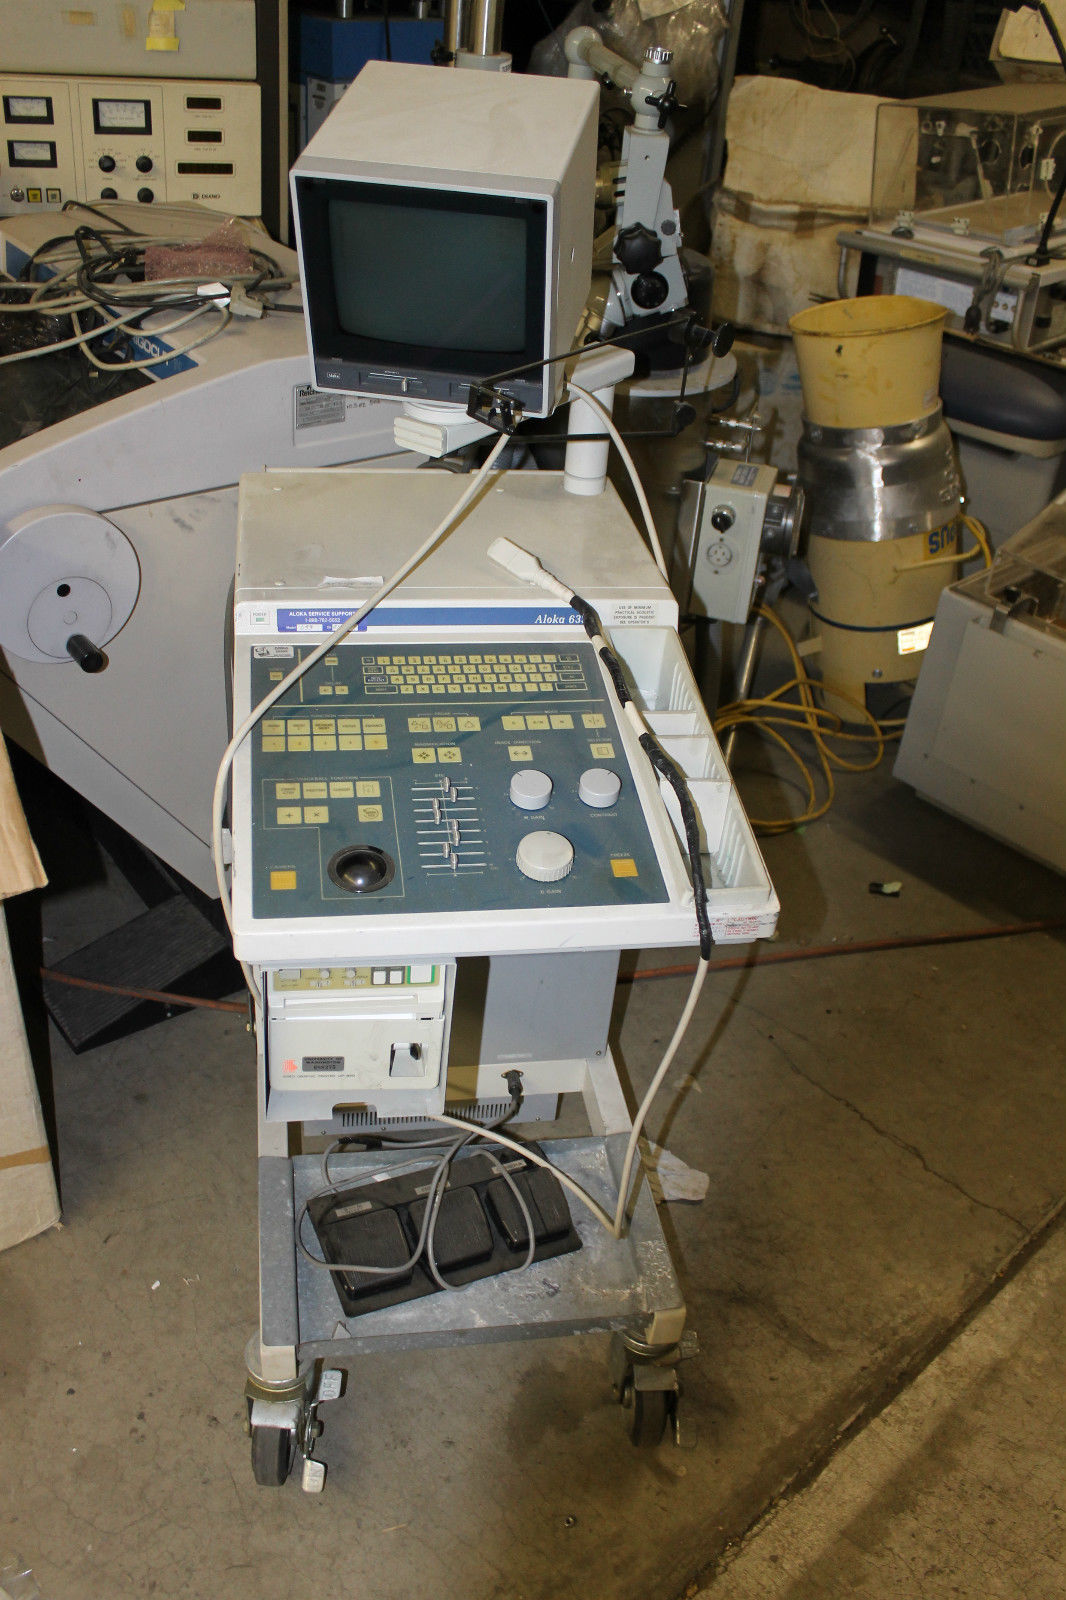 Corometrics Aloka 633 Ultrasound Unit DIAGNOSTIC ULTRASOUND MACHINES FOR SALE